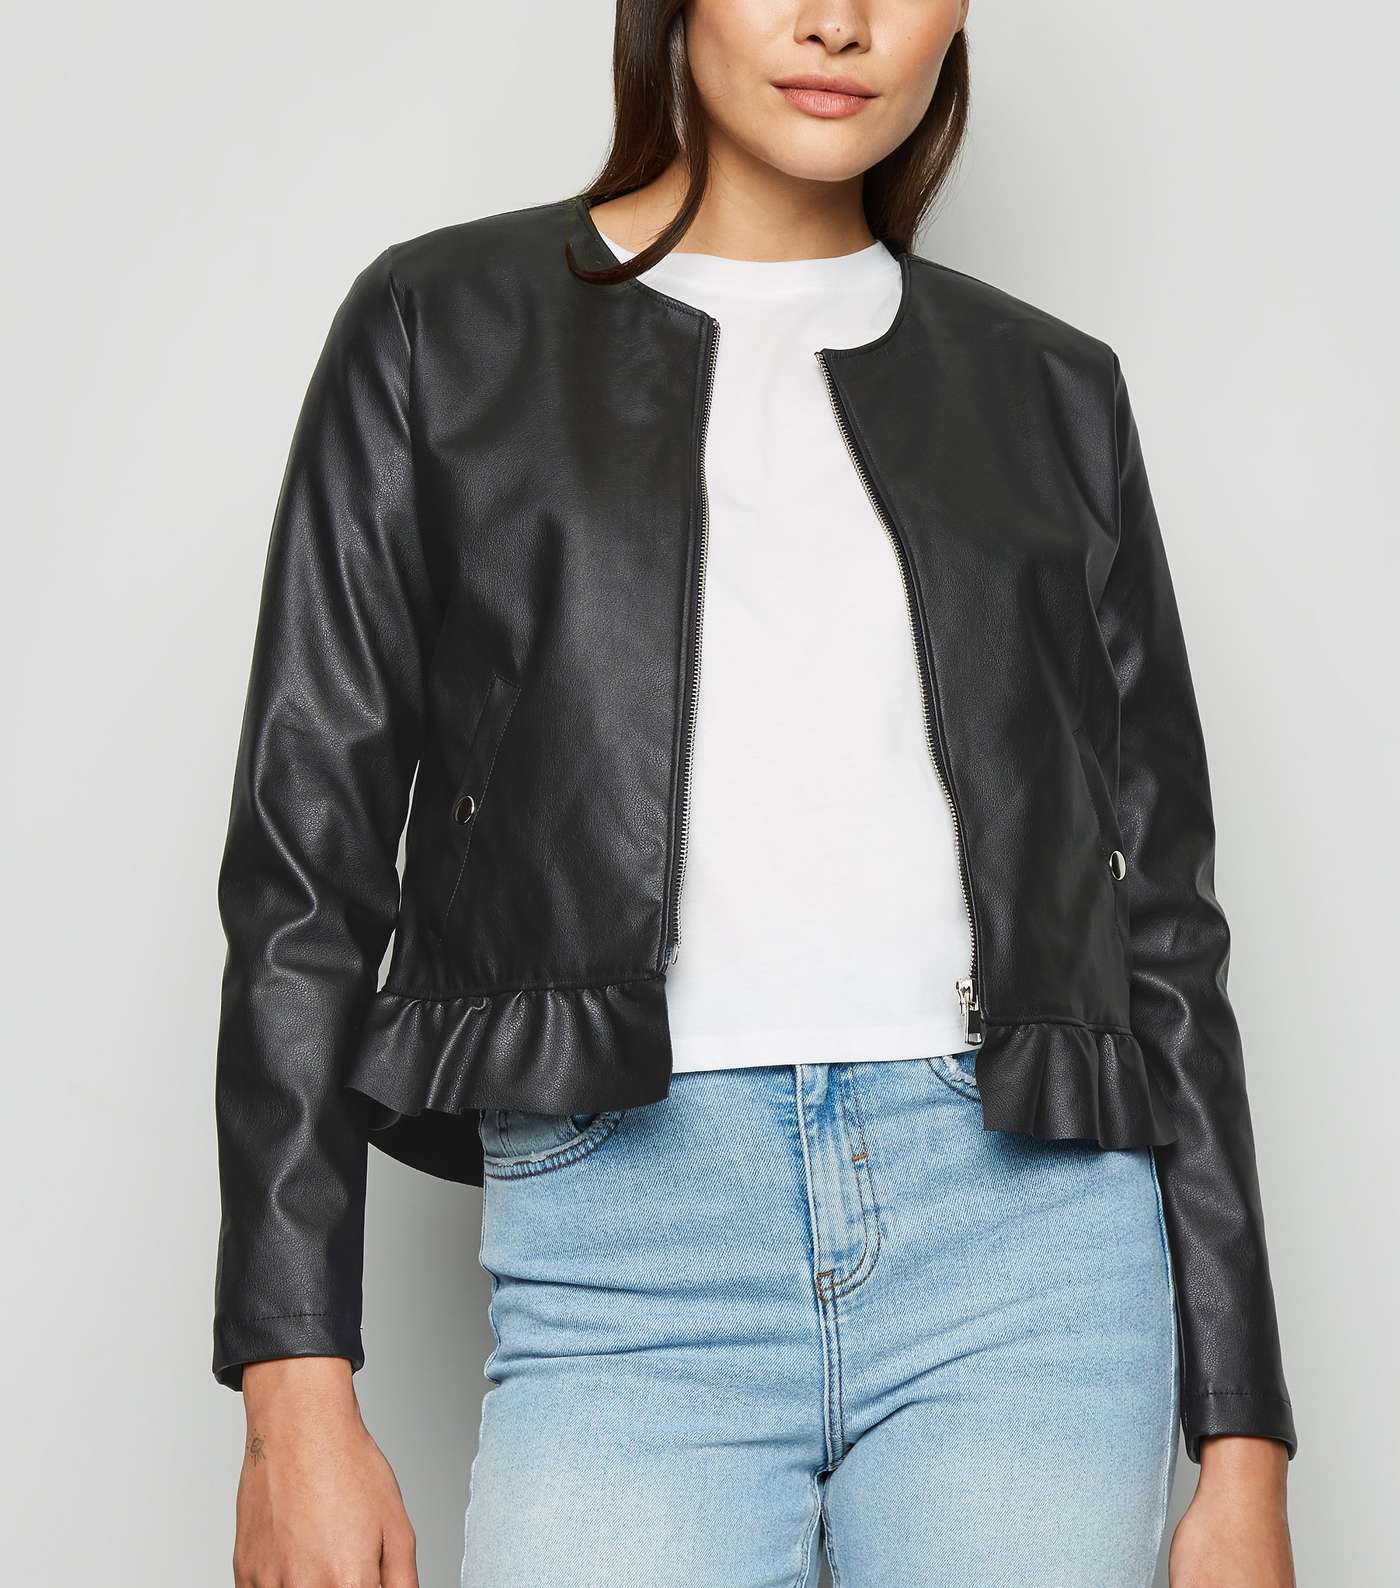 Urban Bliss Black Leather-Look Peplum Jacket